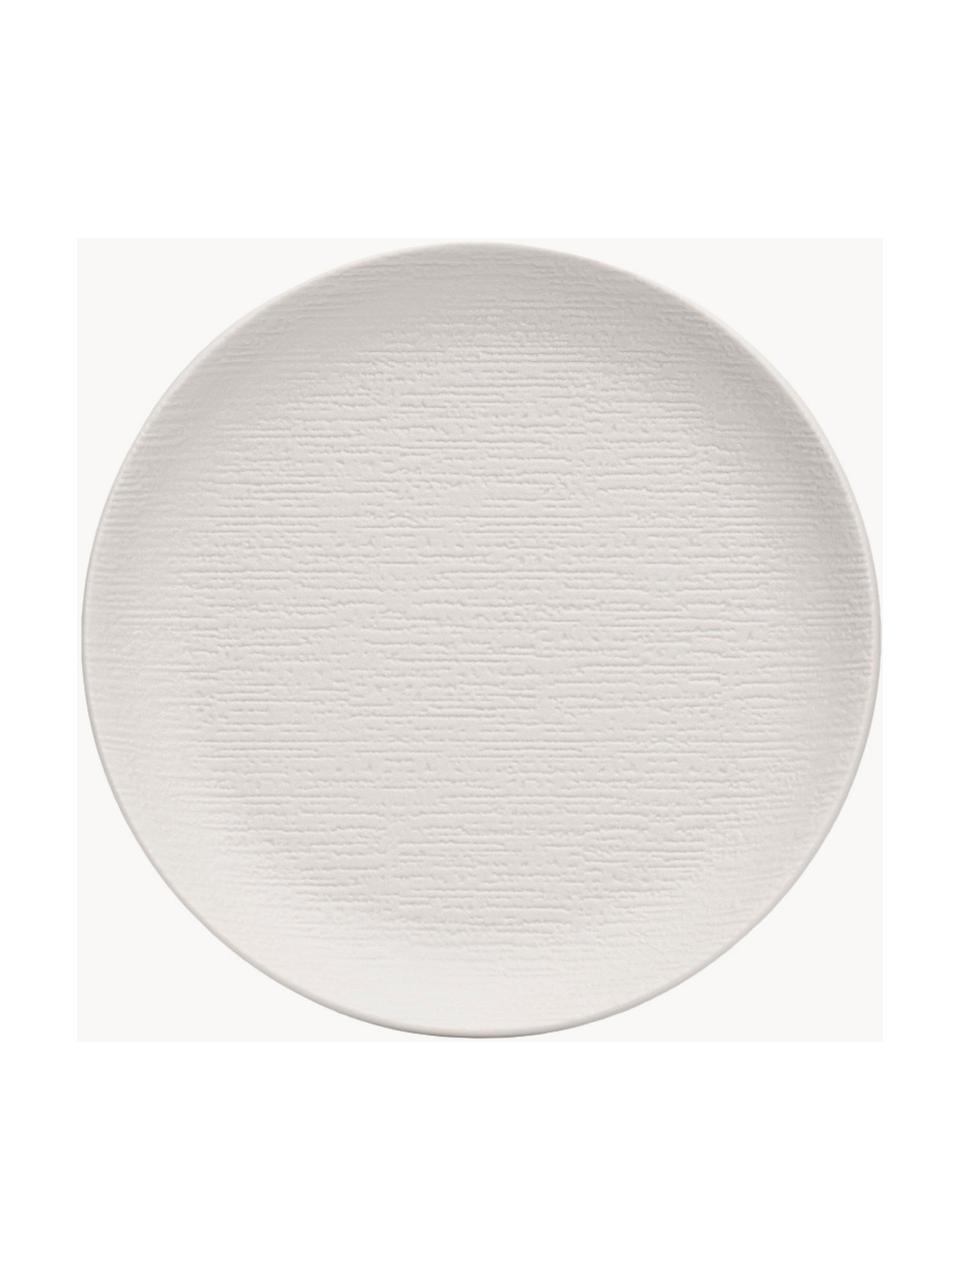 Ontbijtbord Trama uit Melamine, 4 stuks, Melamine, Mat wit, Ø 16 x H 2 cm